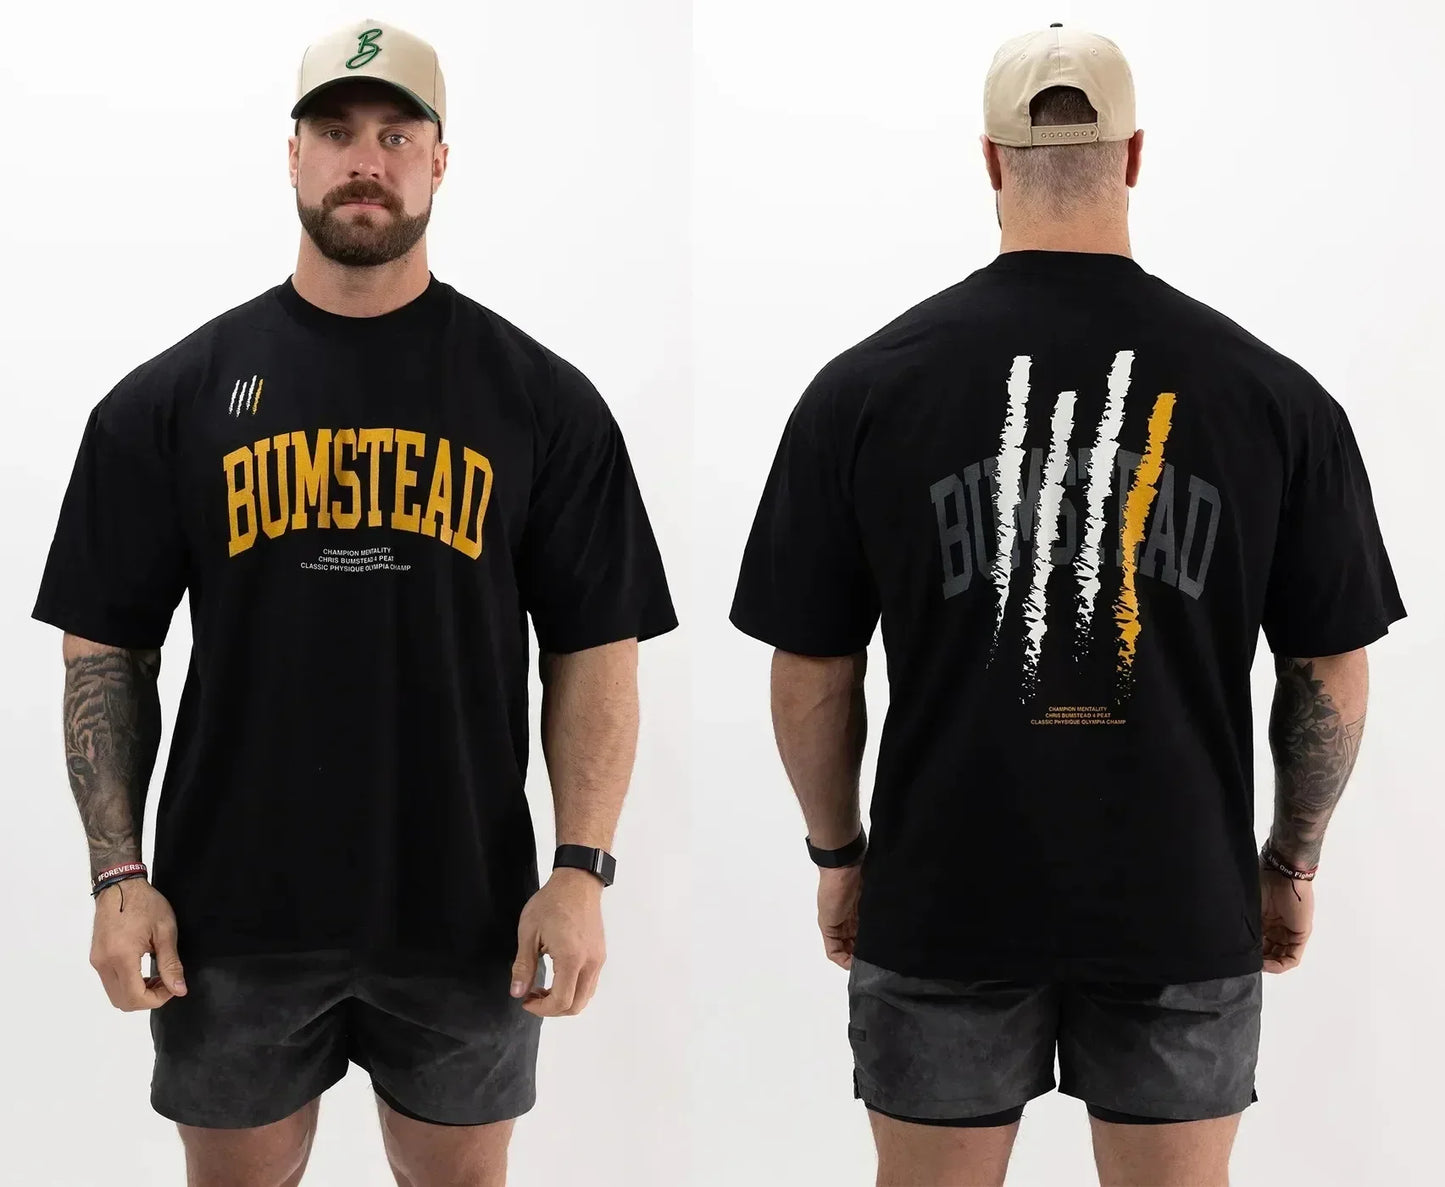 Bodybuilding Short Sleeve Men's T-Shirt